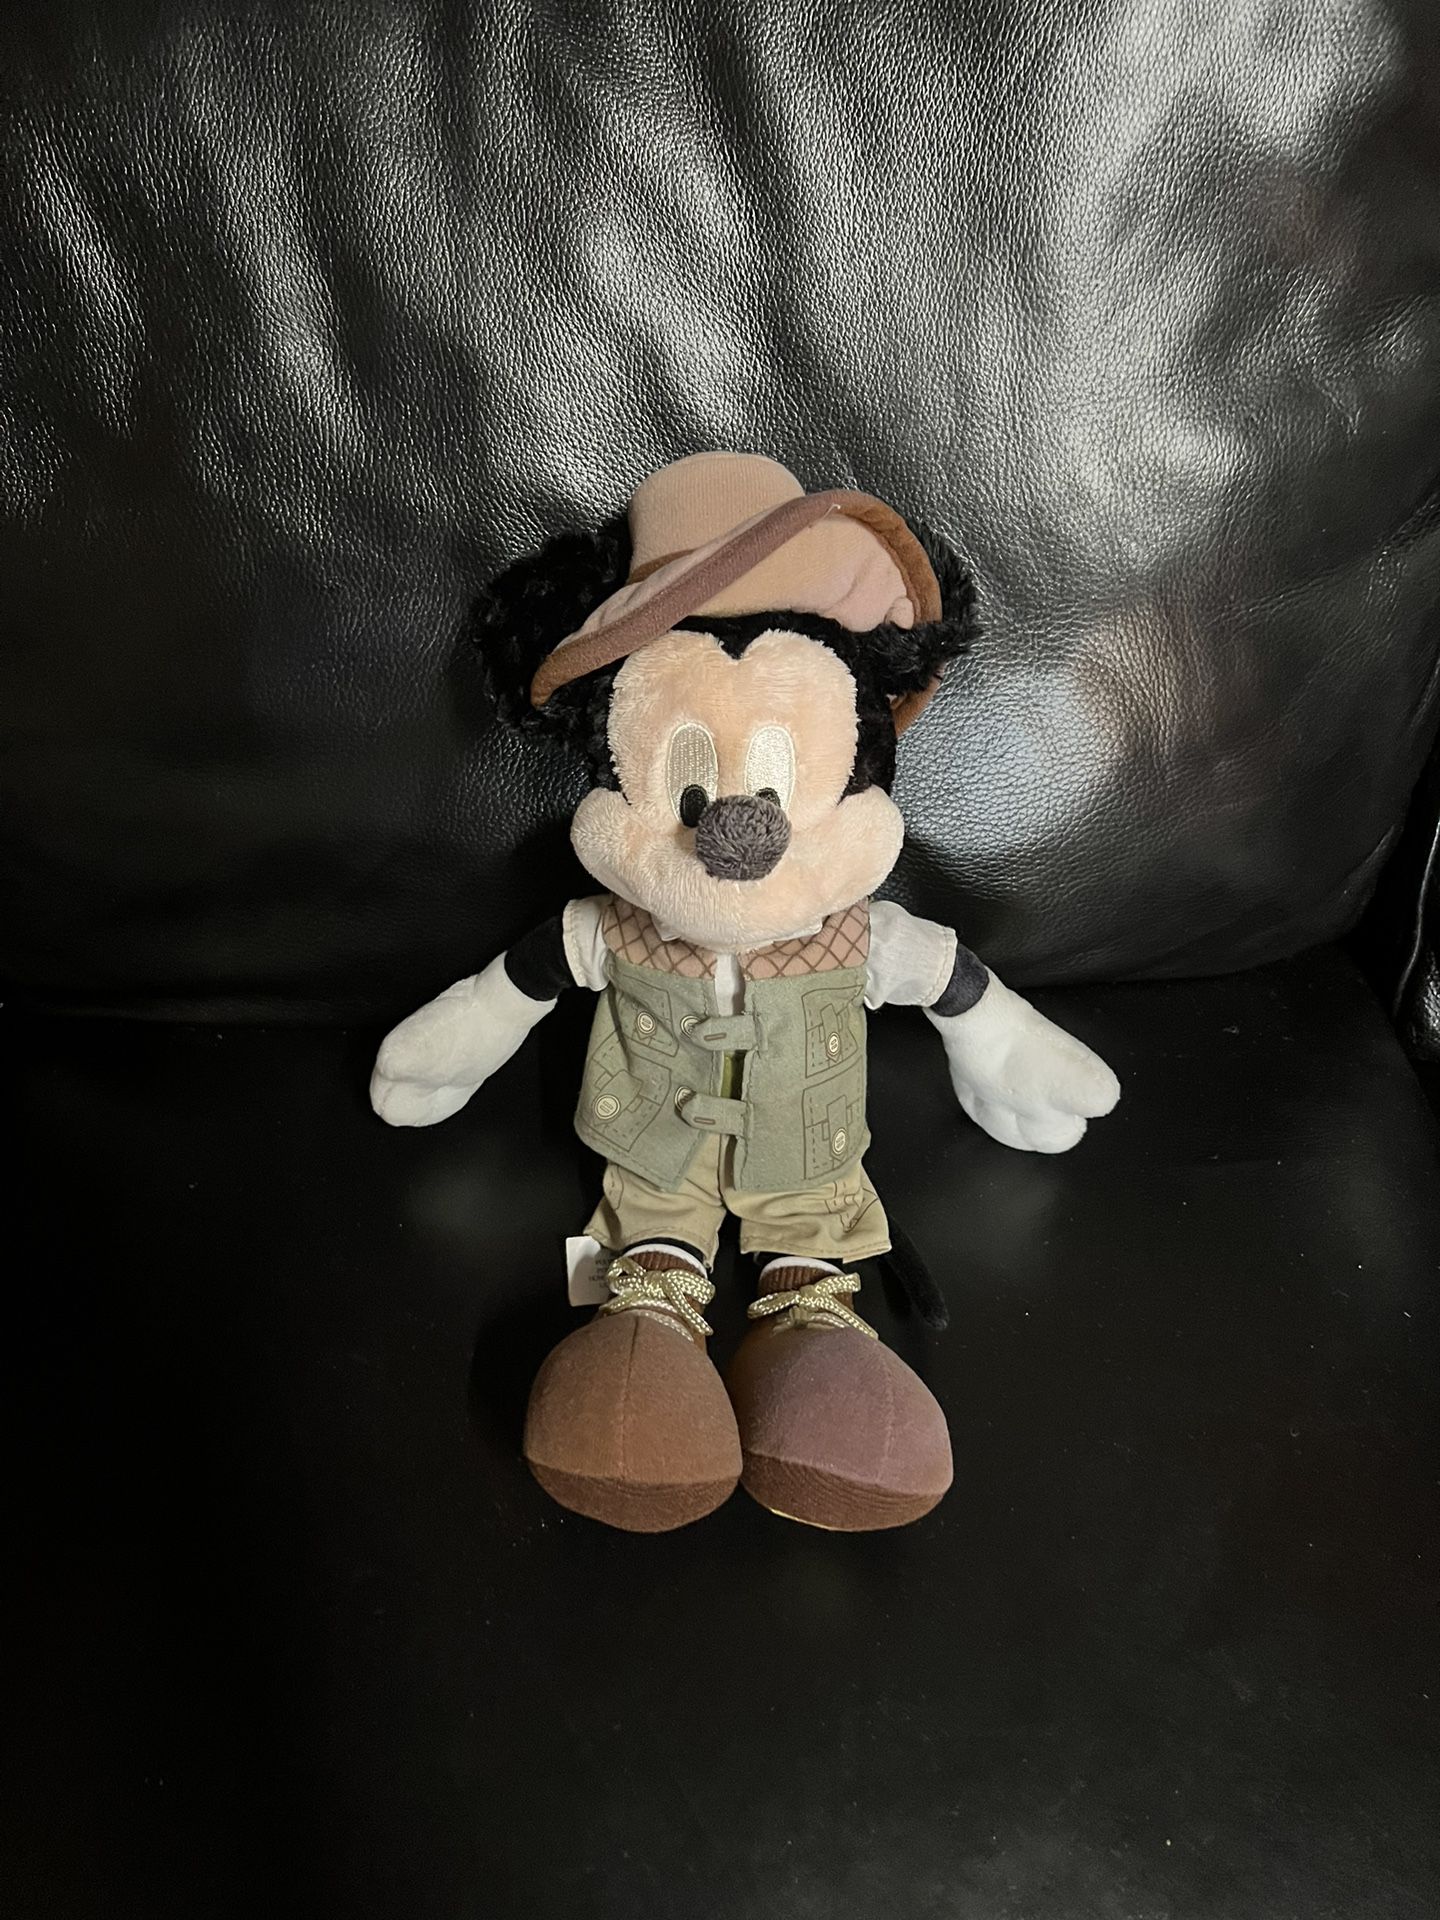 New Disneyland Hong Kong Mickey Mouse plush safari explorer limited stuffed anim